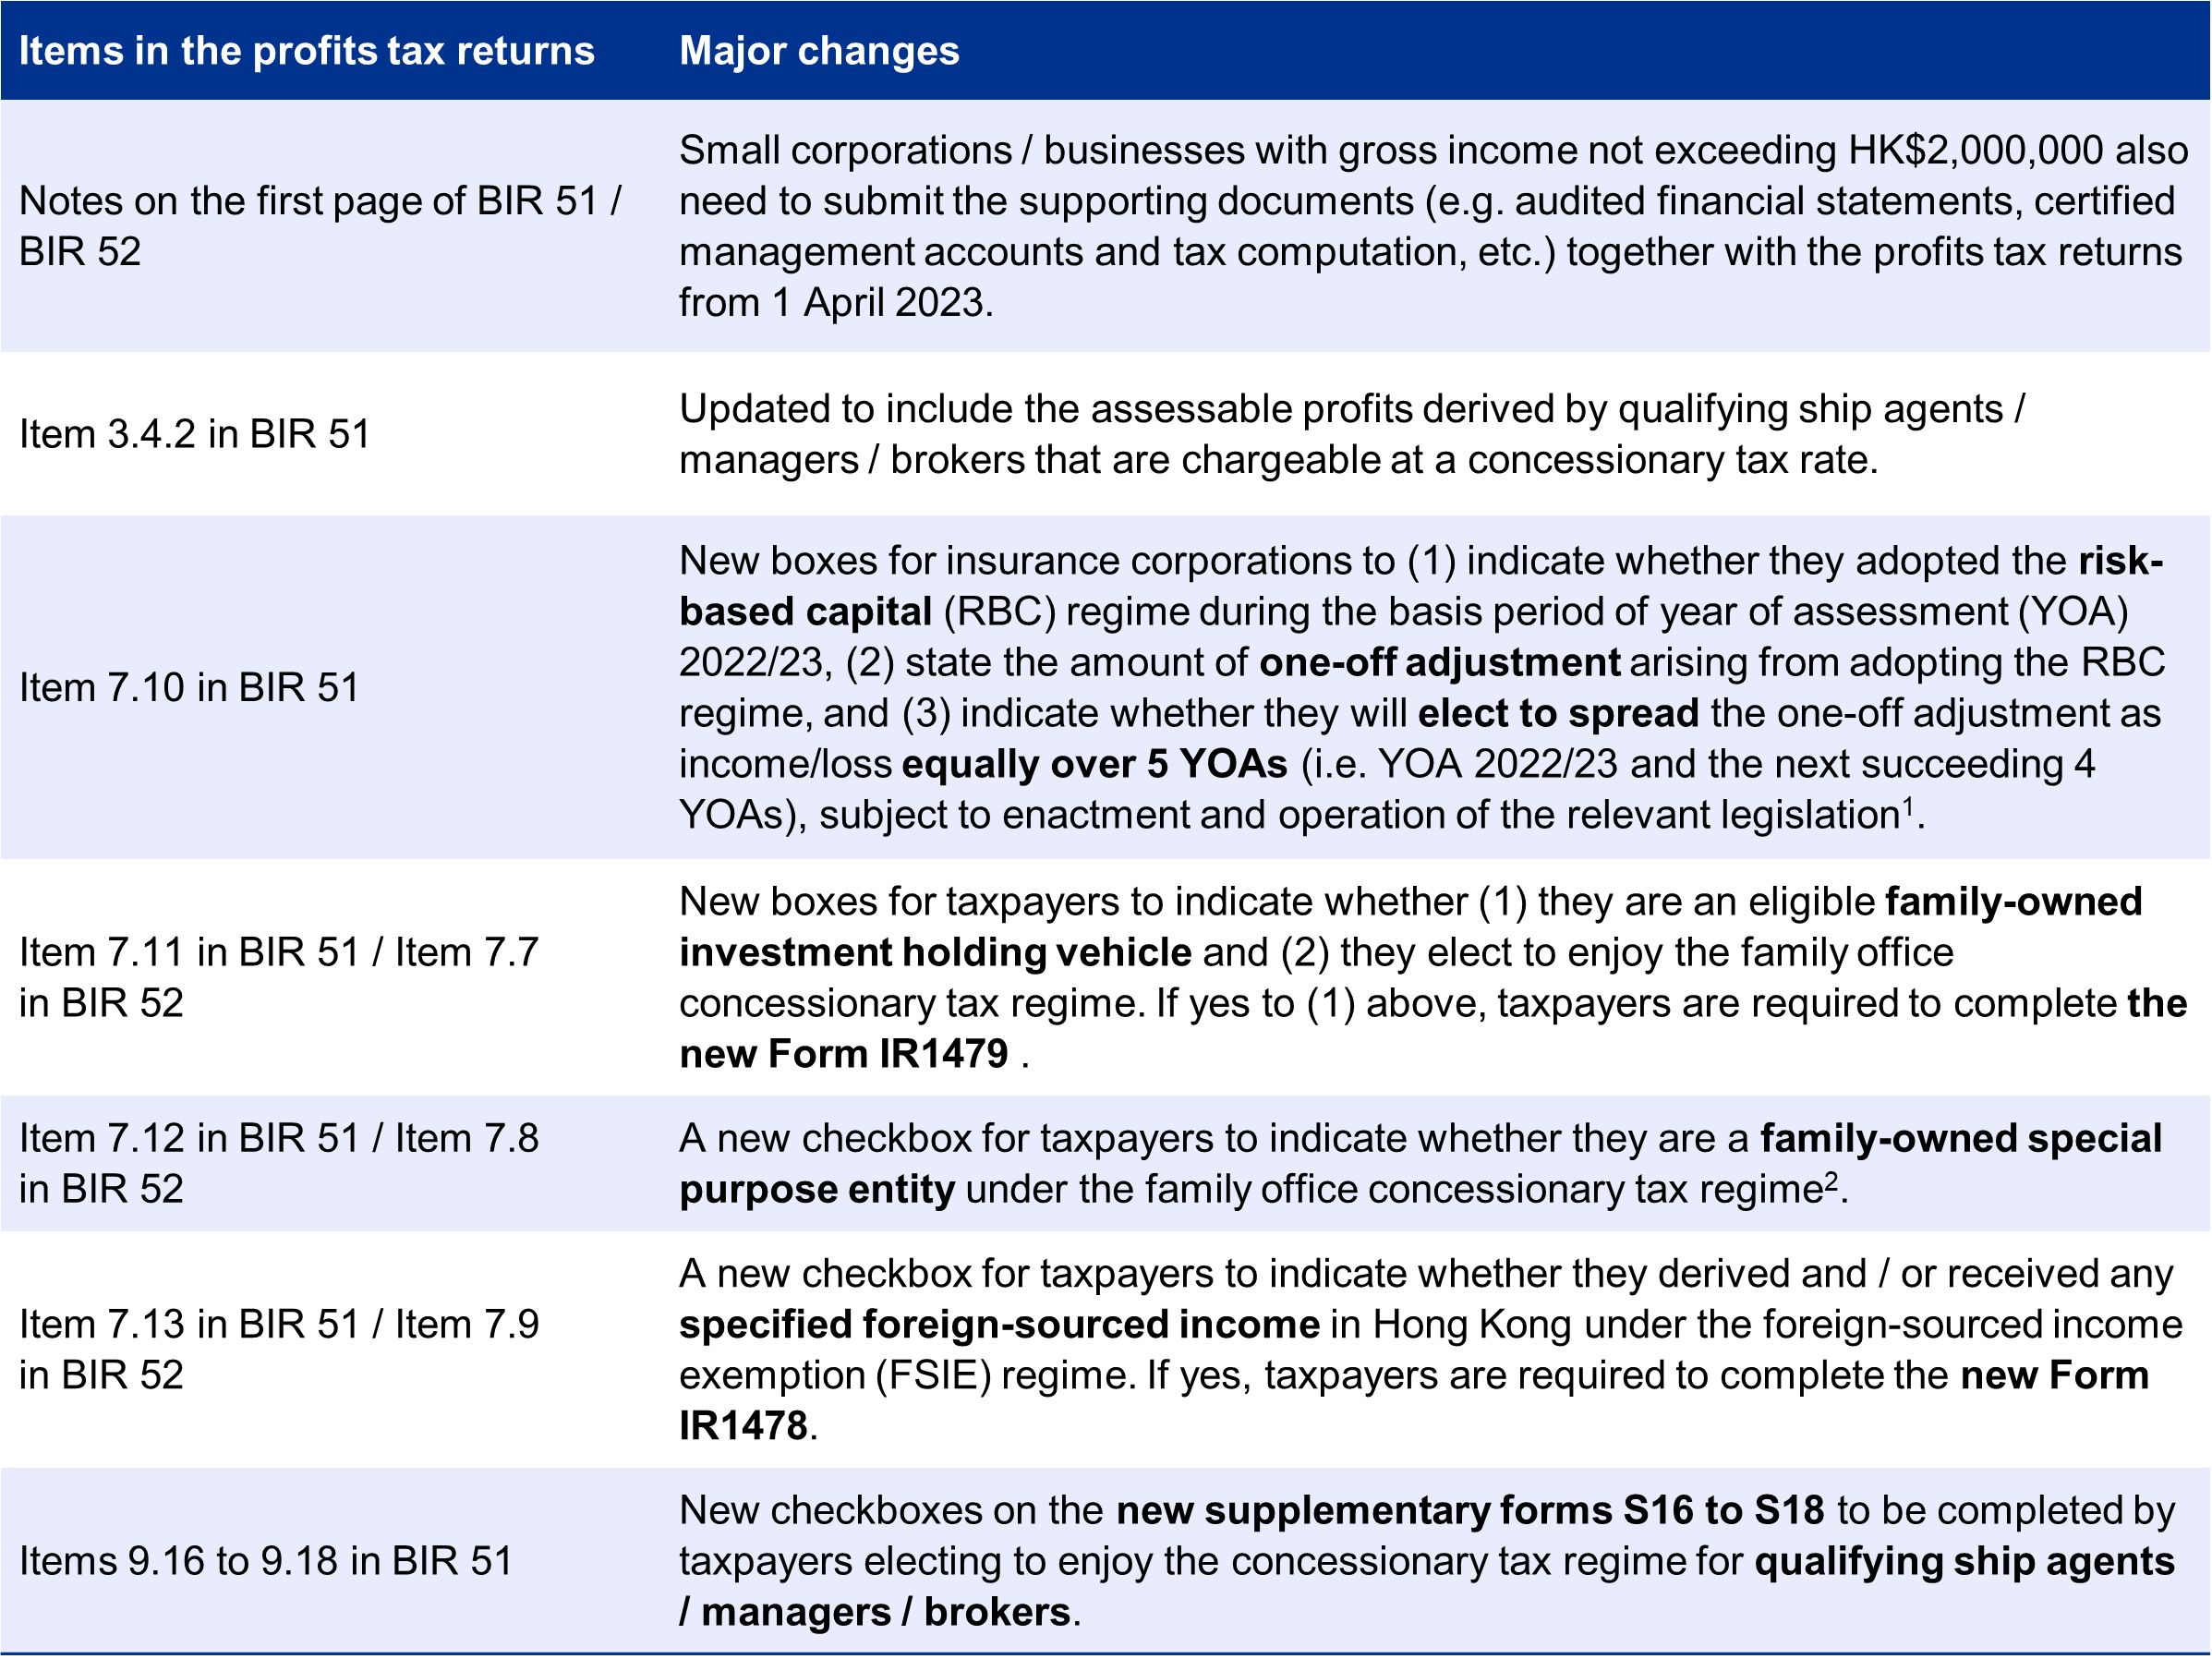 Key changes in the 2022/23 profits tax returns (i.e. BIR 51 and BIR 52)